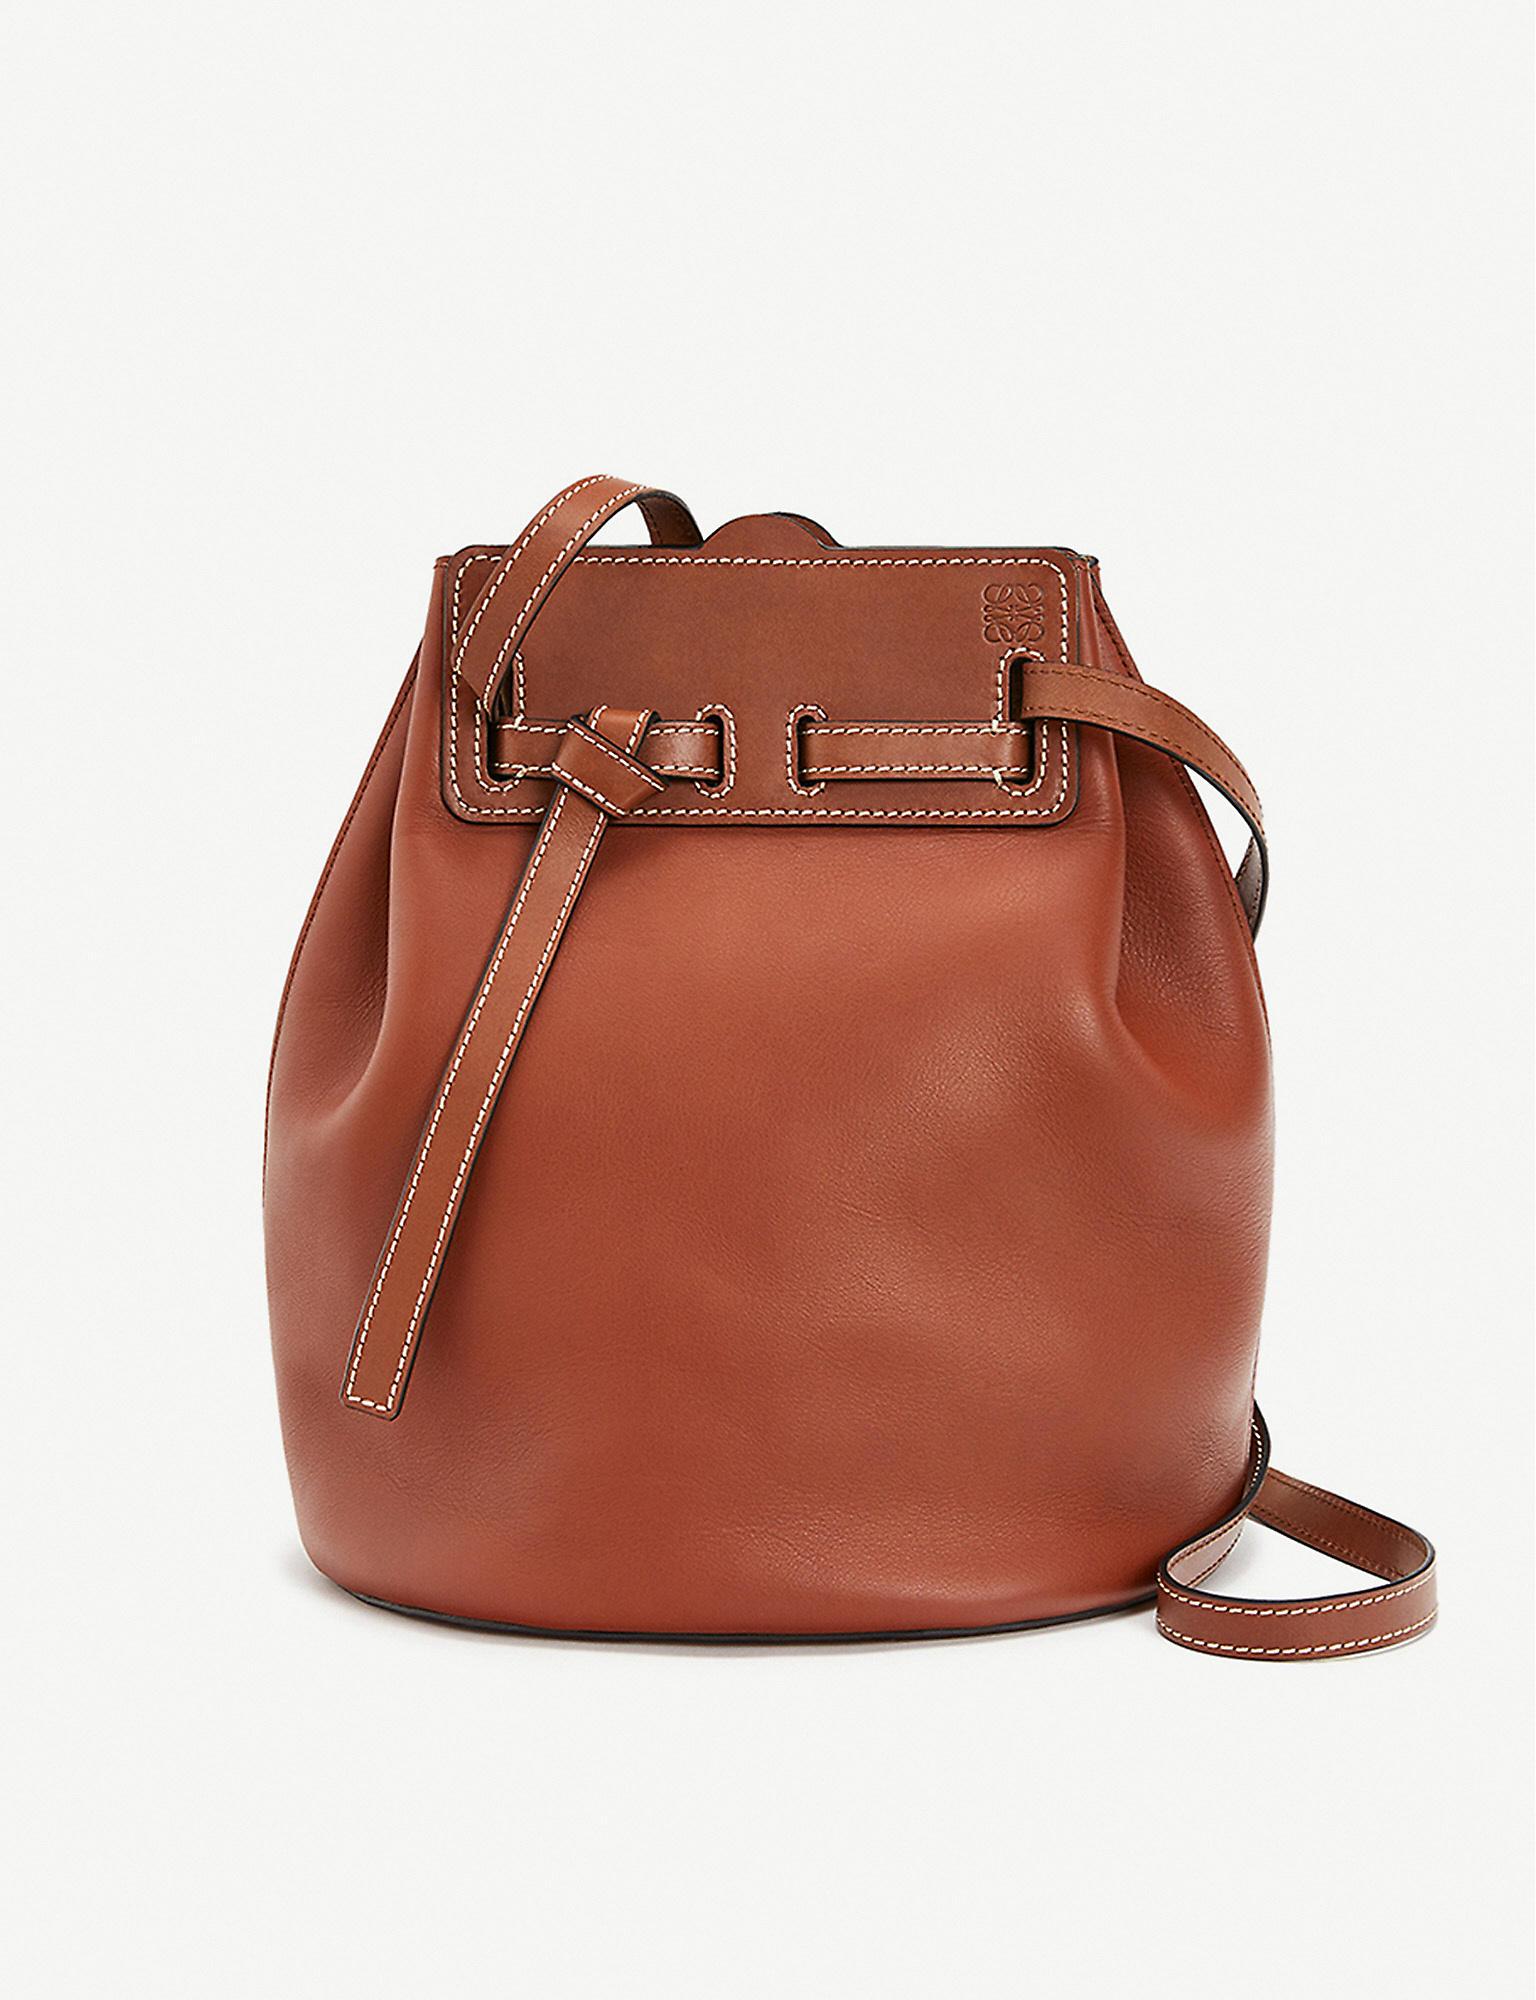 Loewe Lazo Leather Bucket Bag in Dark Taupe/Tan (Brown) - Save 33% - Lyst